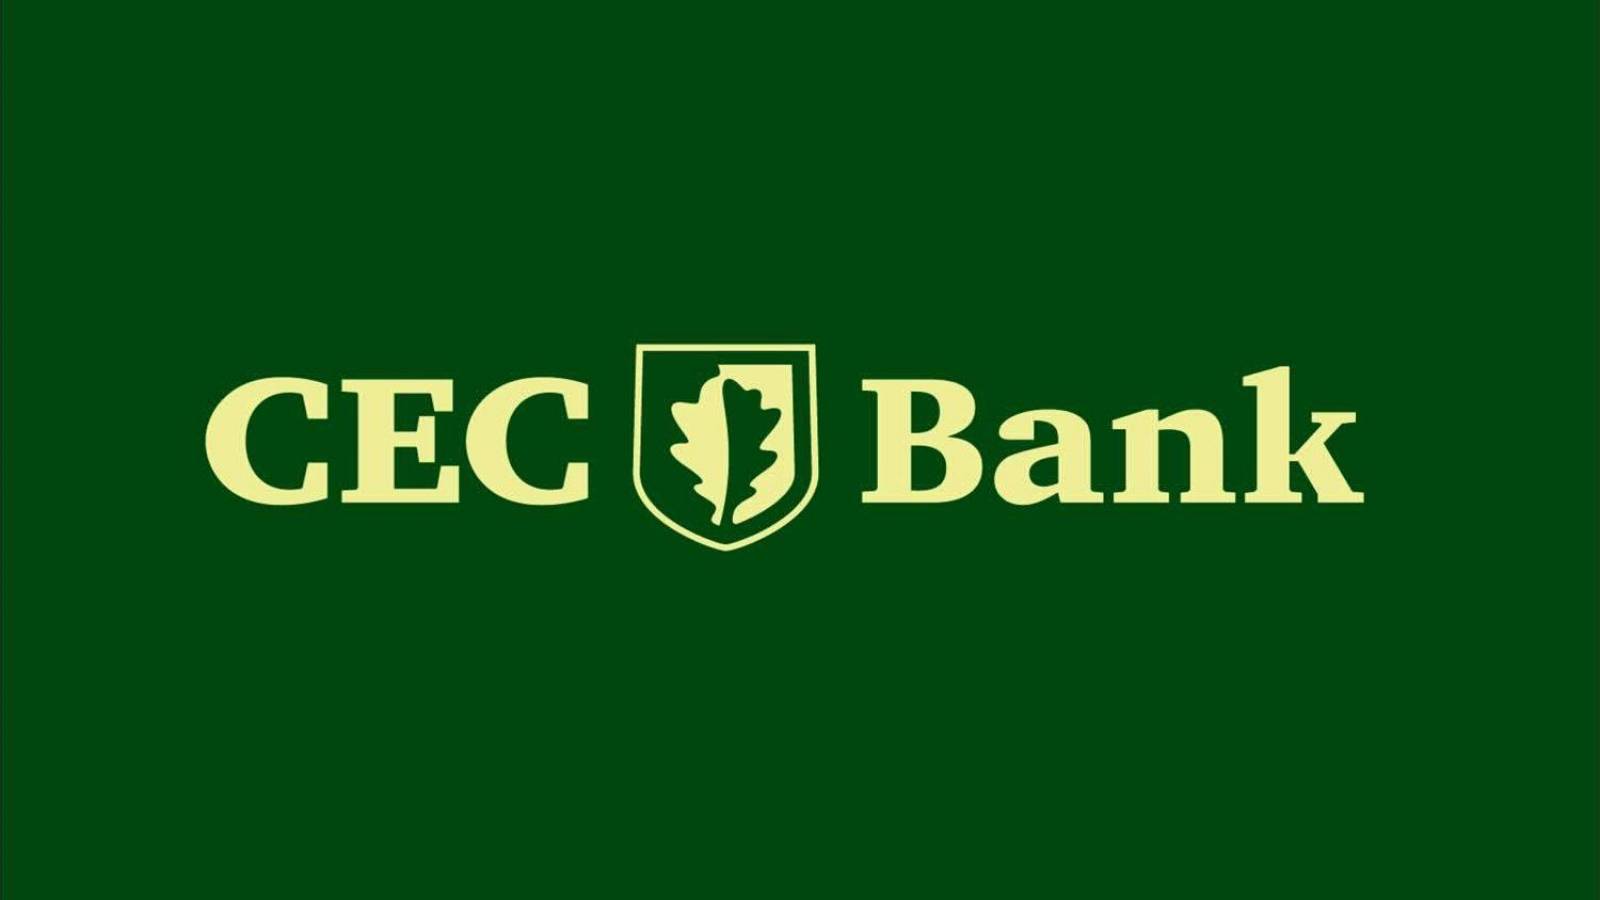 Banque CEC gratuitement